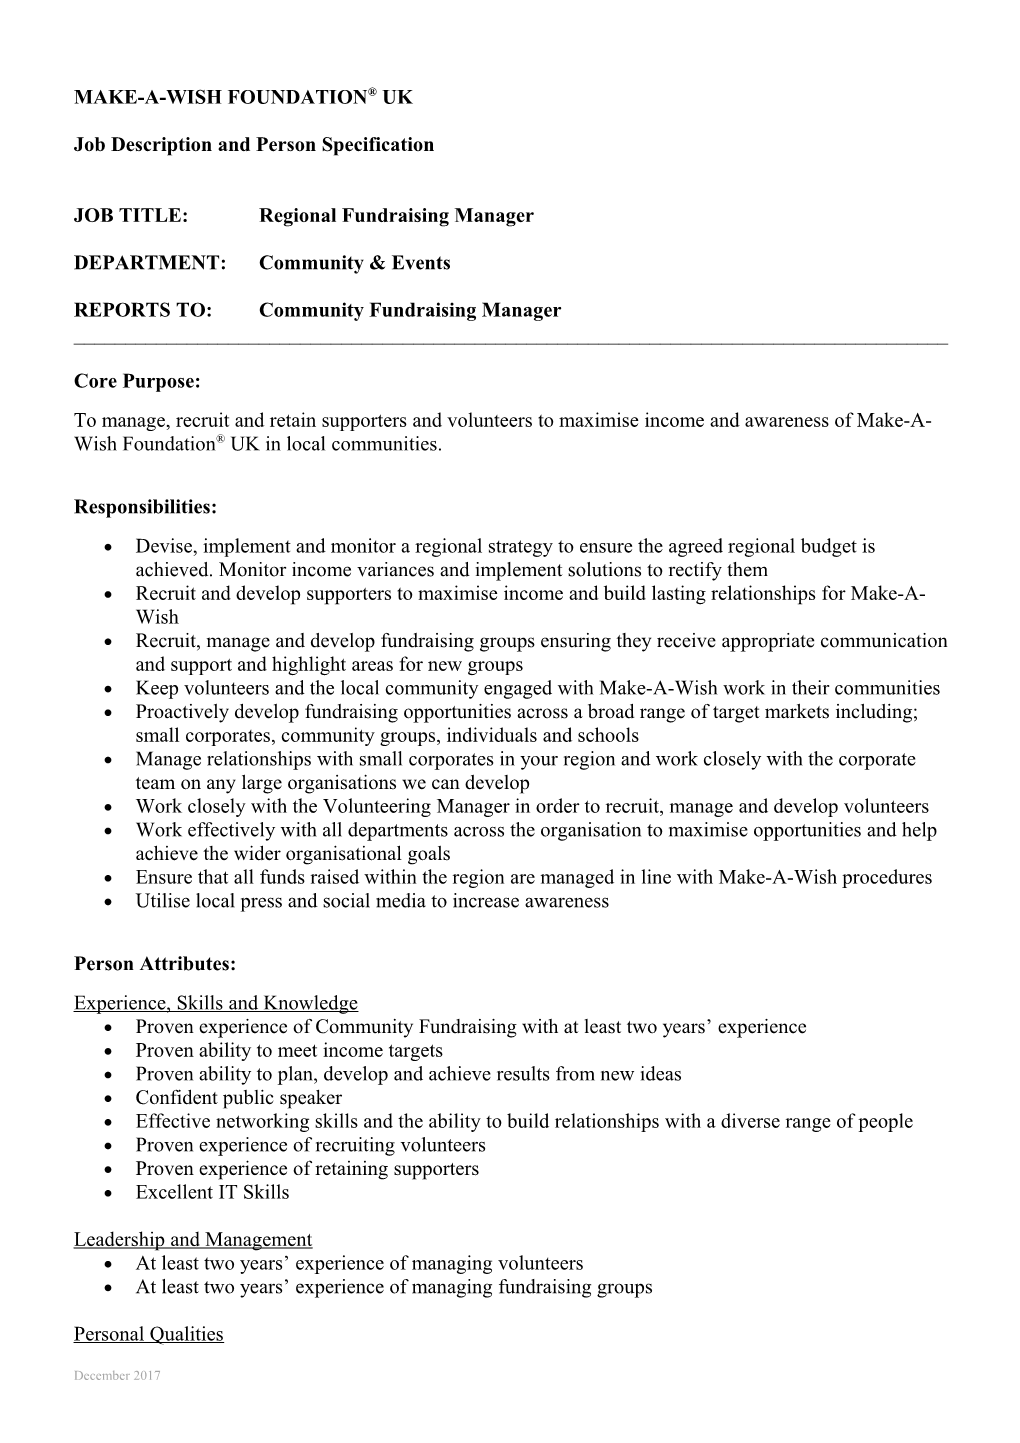 Job Description and Person Specification s7